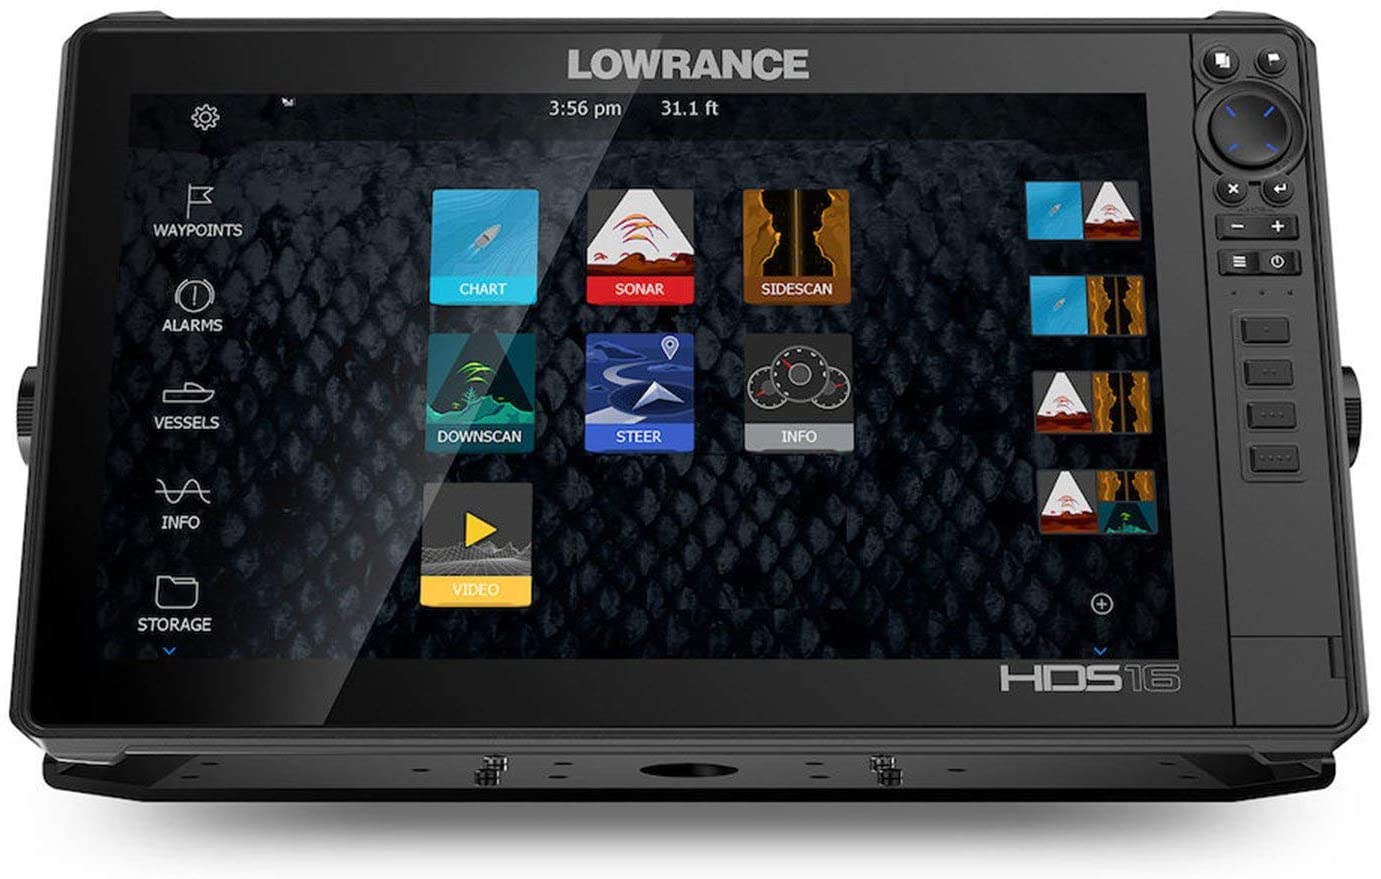 Lowrance HDS-16 Live